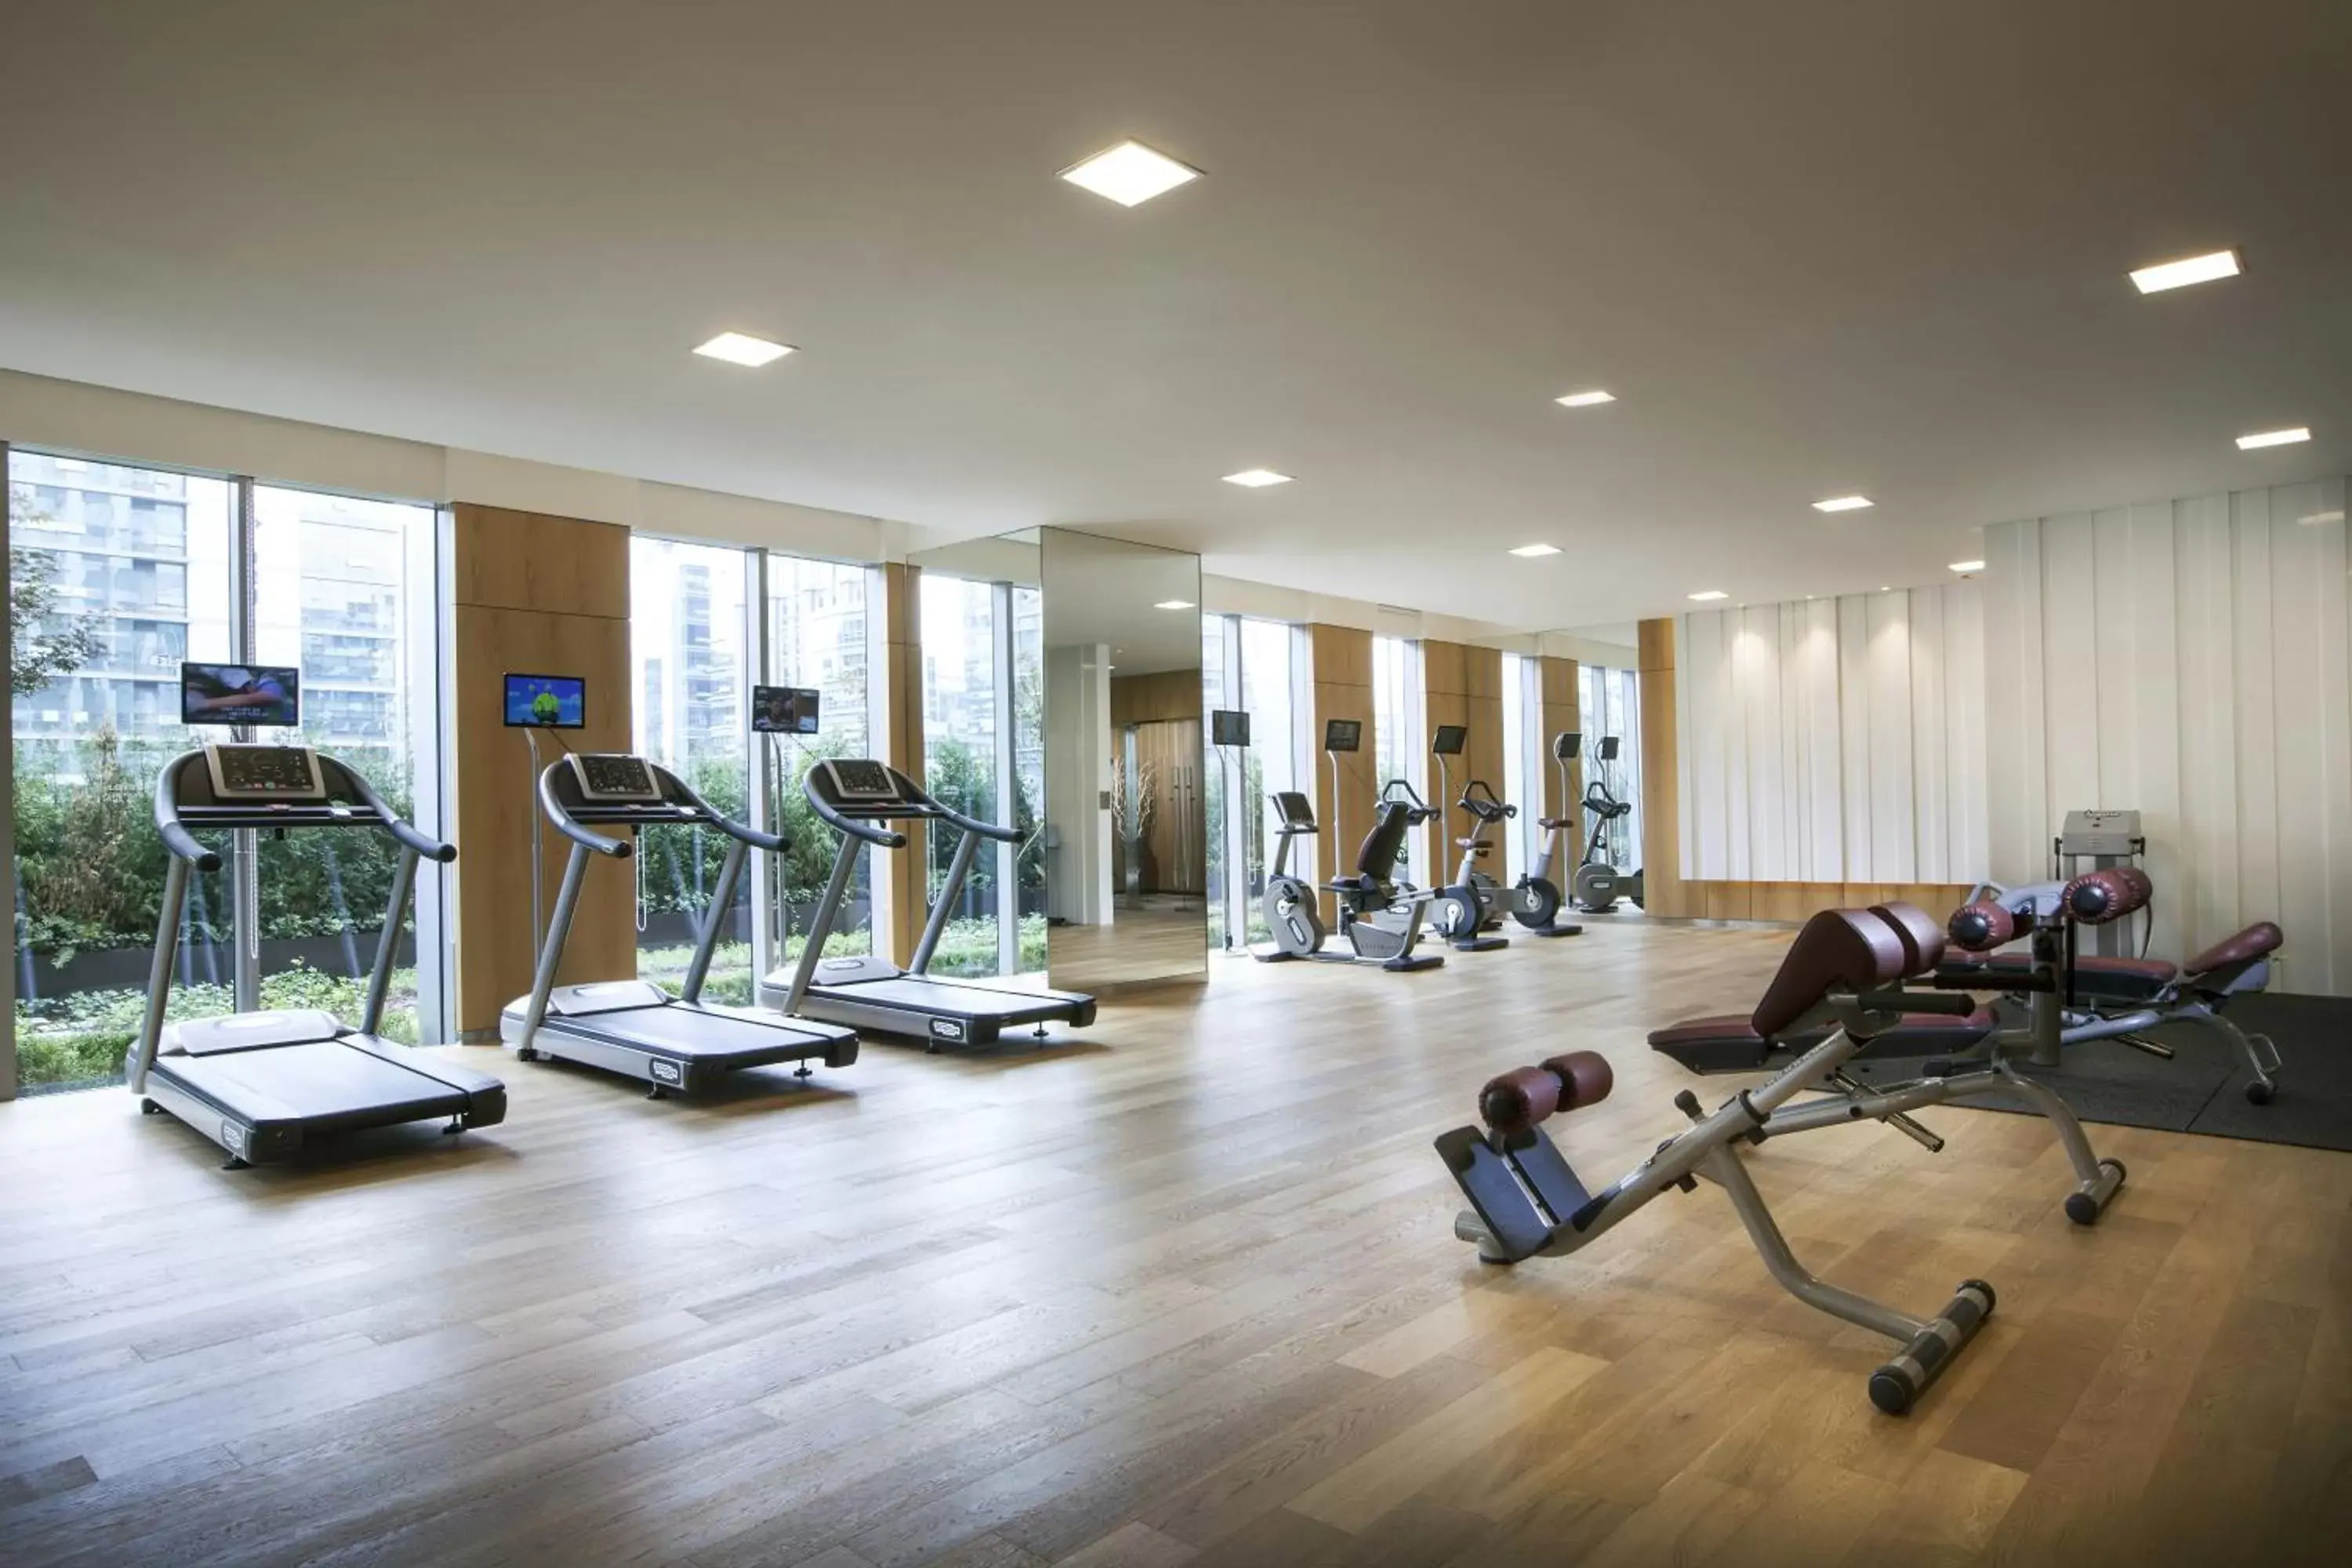 Fitness centre/facilities, Fitness Center/Facilities in LOTTE City Hotel Guro